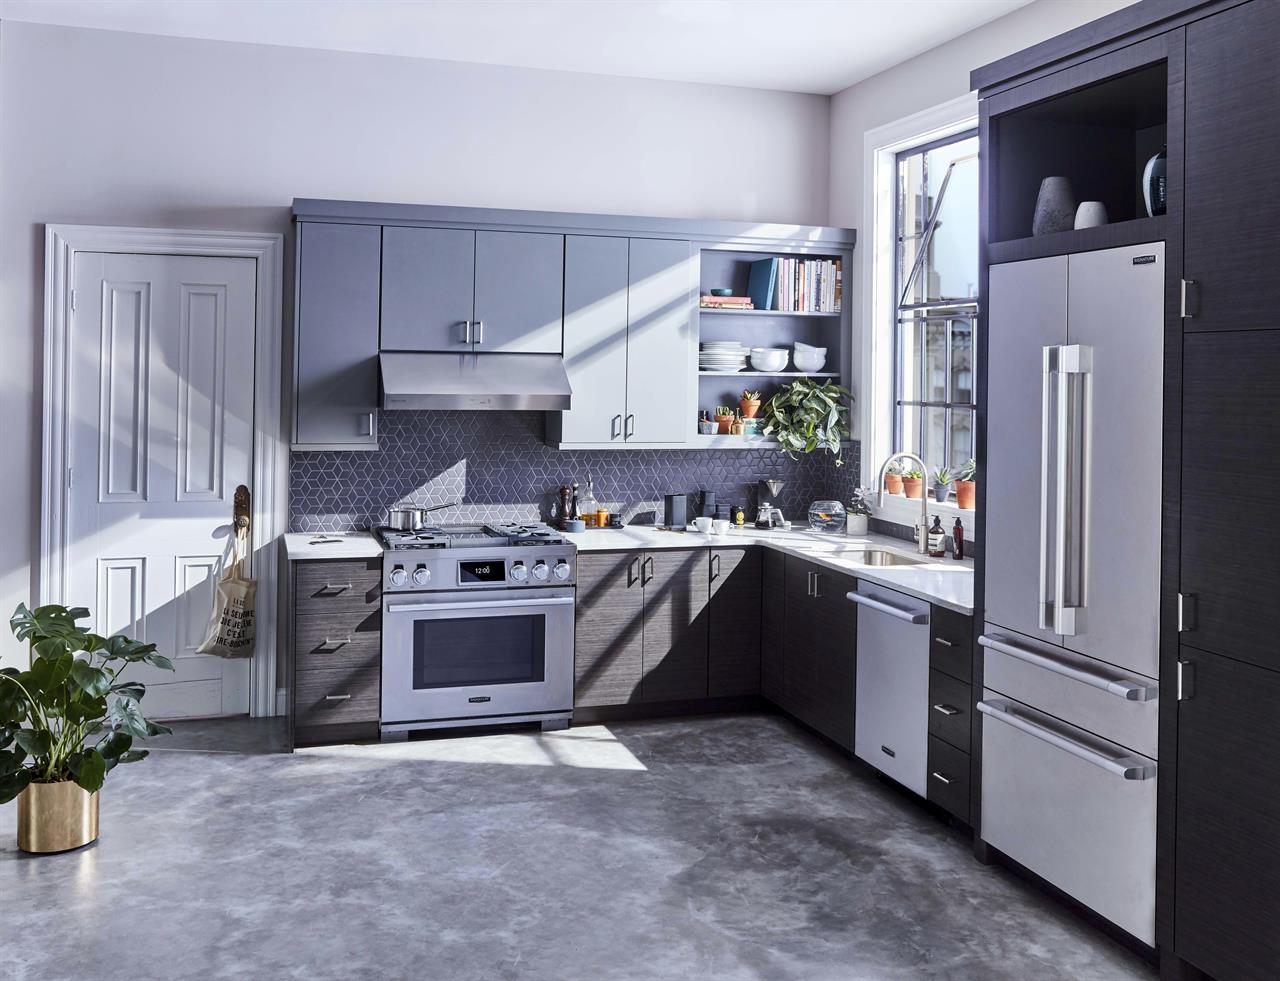 future kitchen interior design